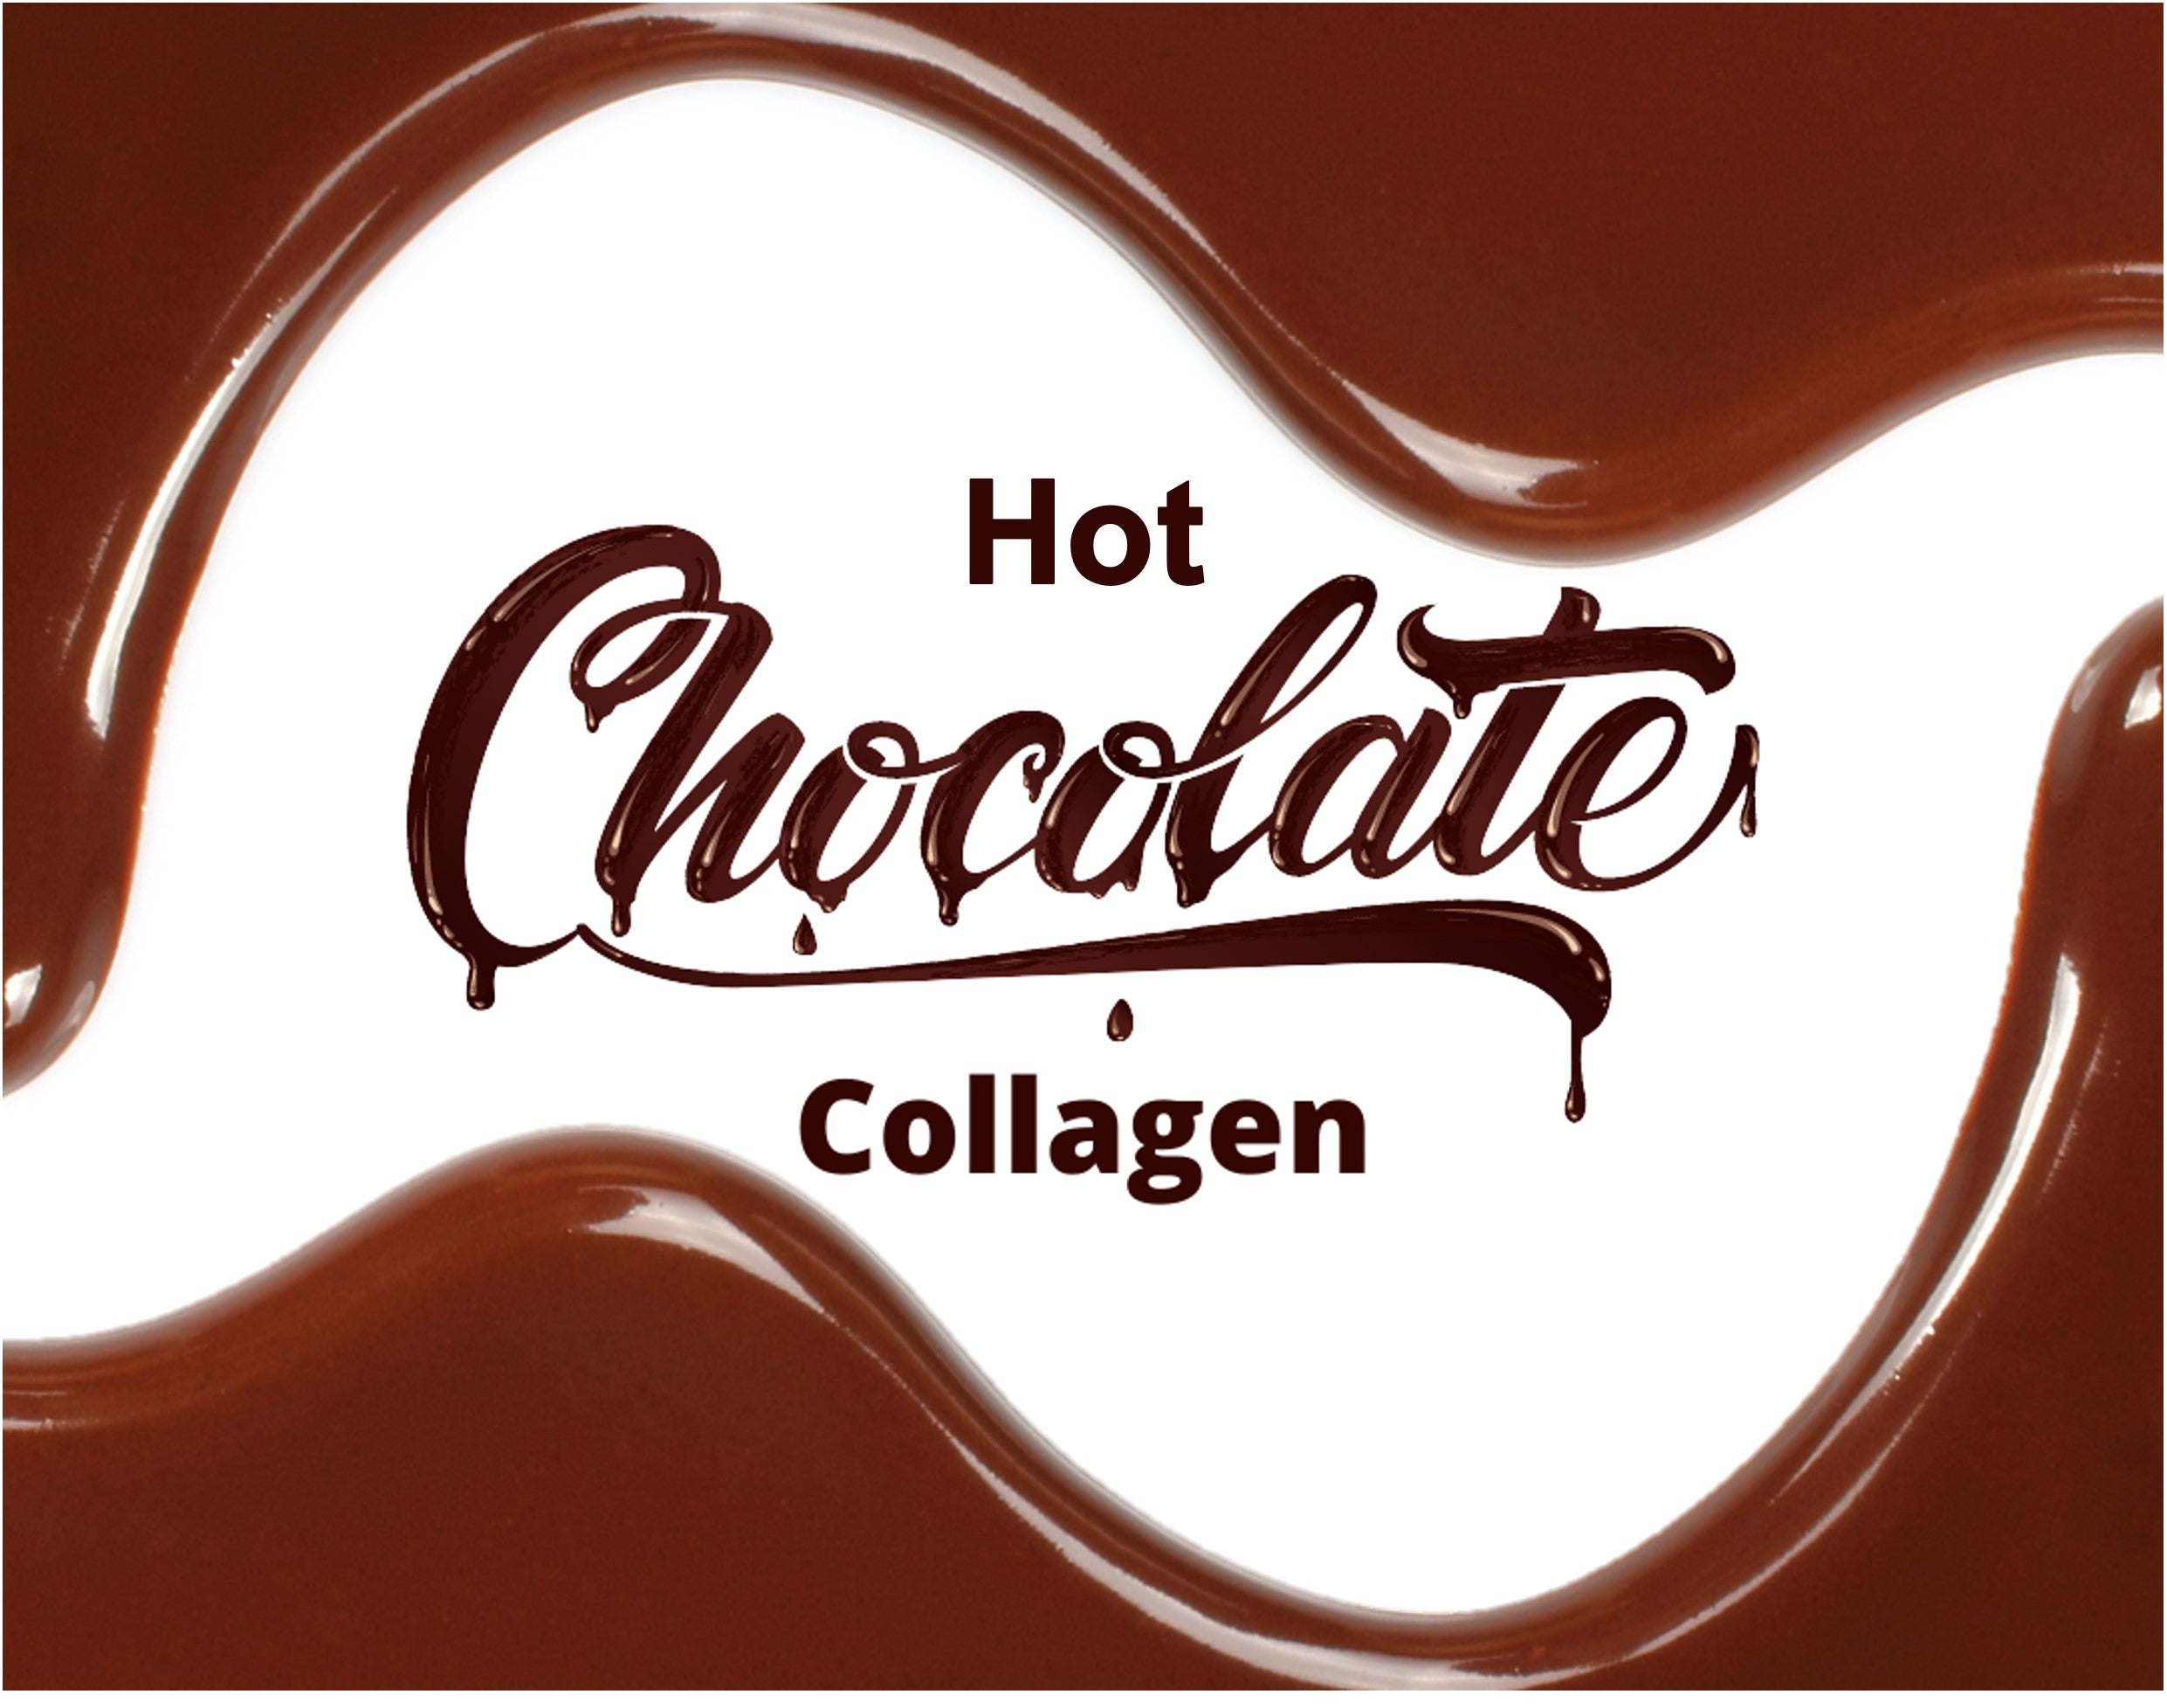 Hot Chocolate Collagen 1 lb